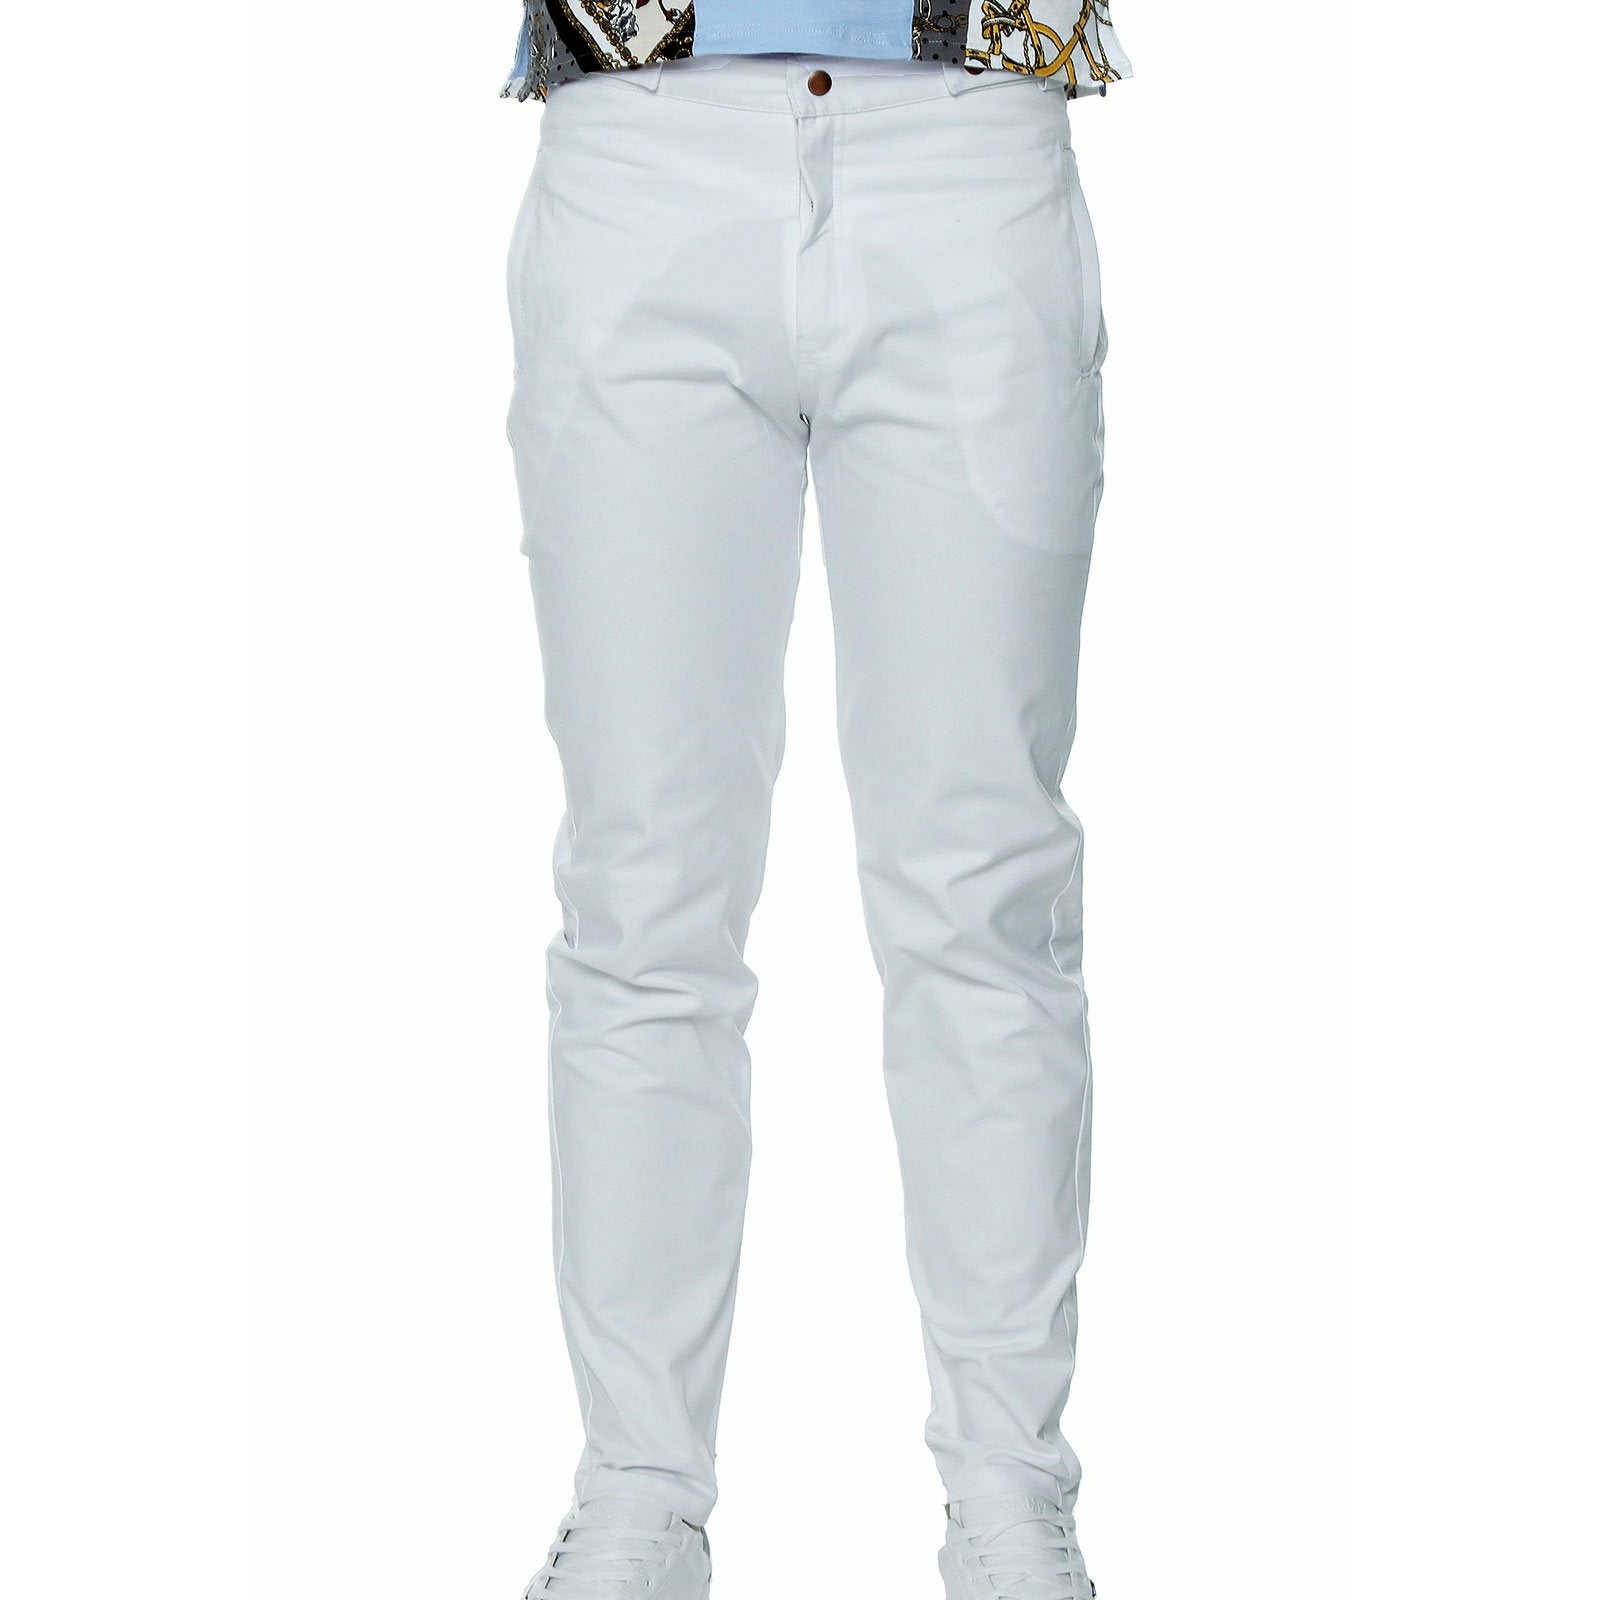 Pantalón Blanco para hombre, pantalón básico para el guardaropas masculino  Pantalón Atracción, hecho en Colombia!